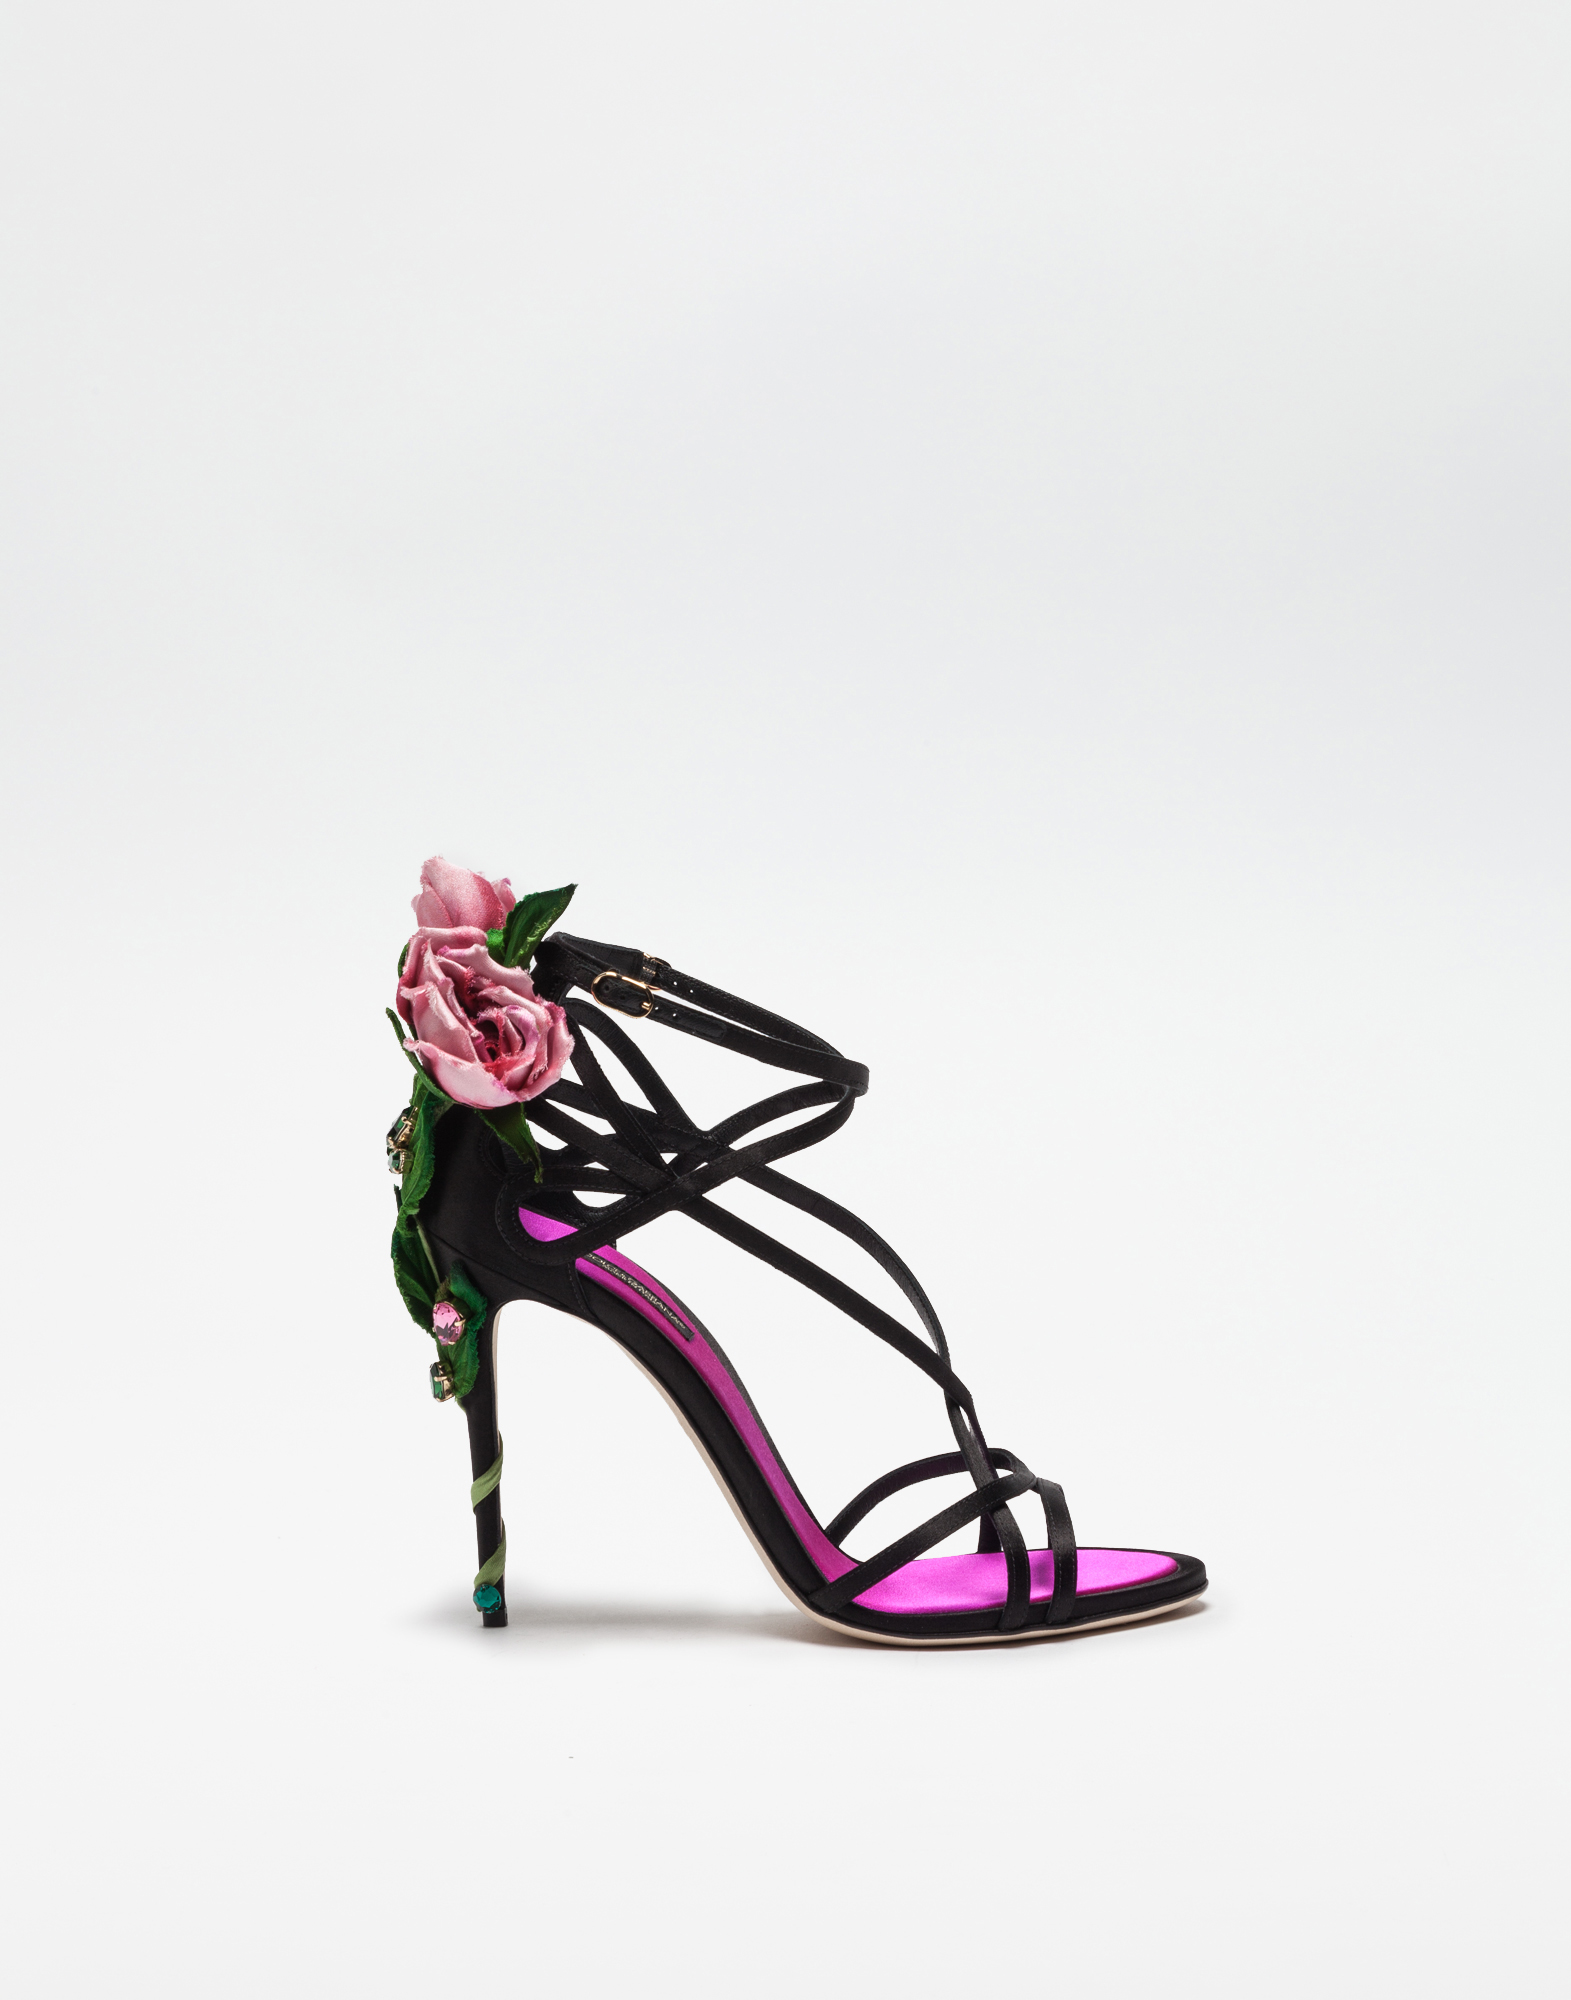 pink jeweled heels